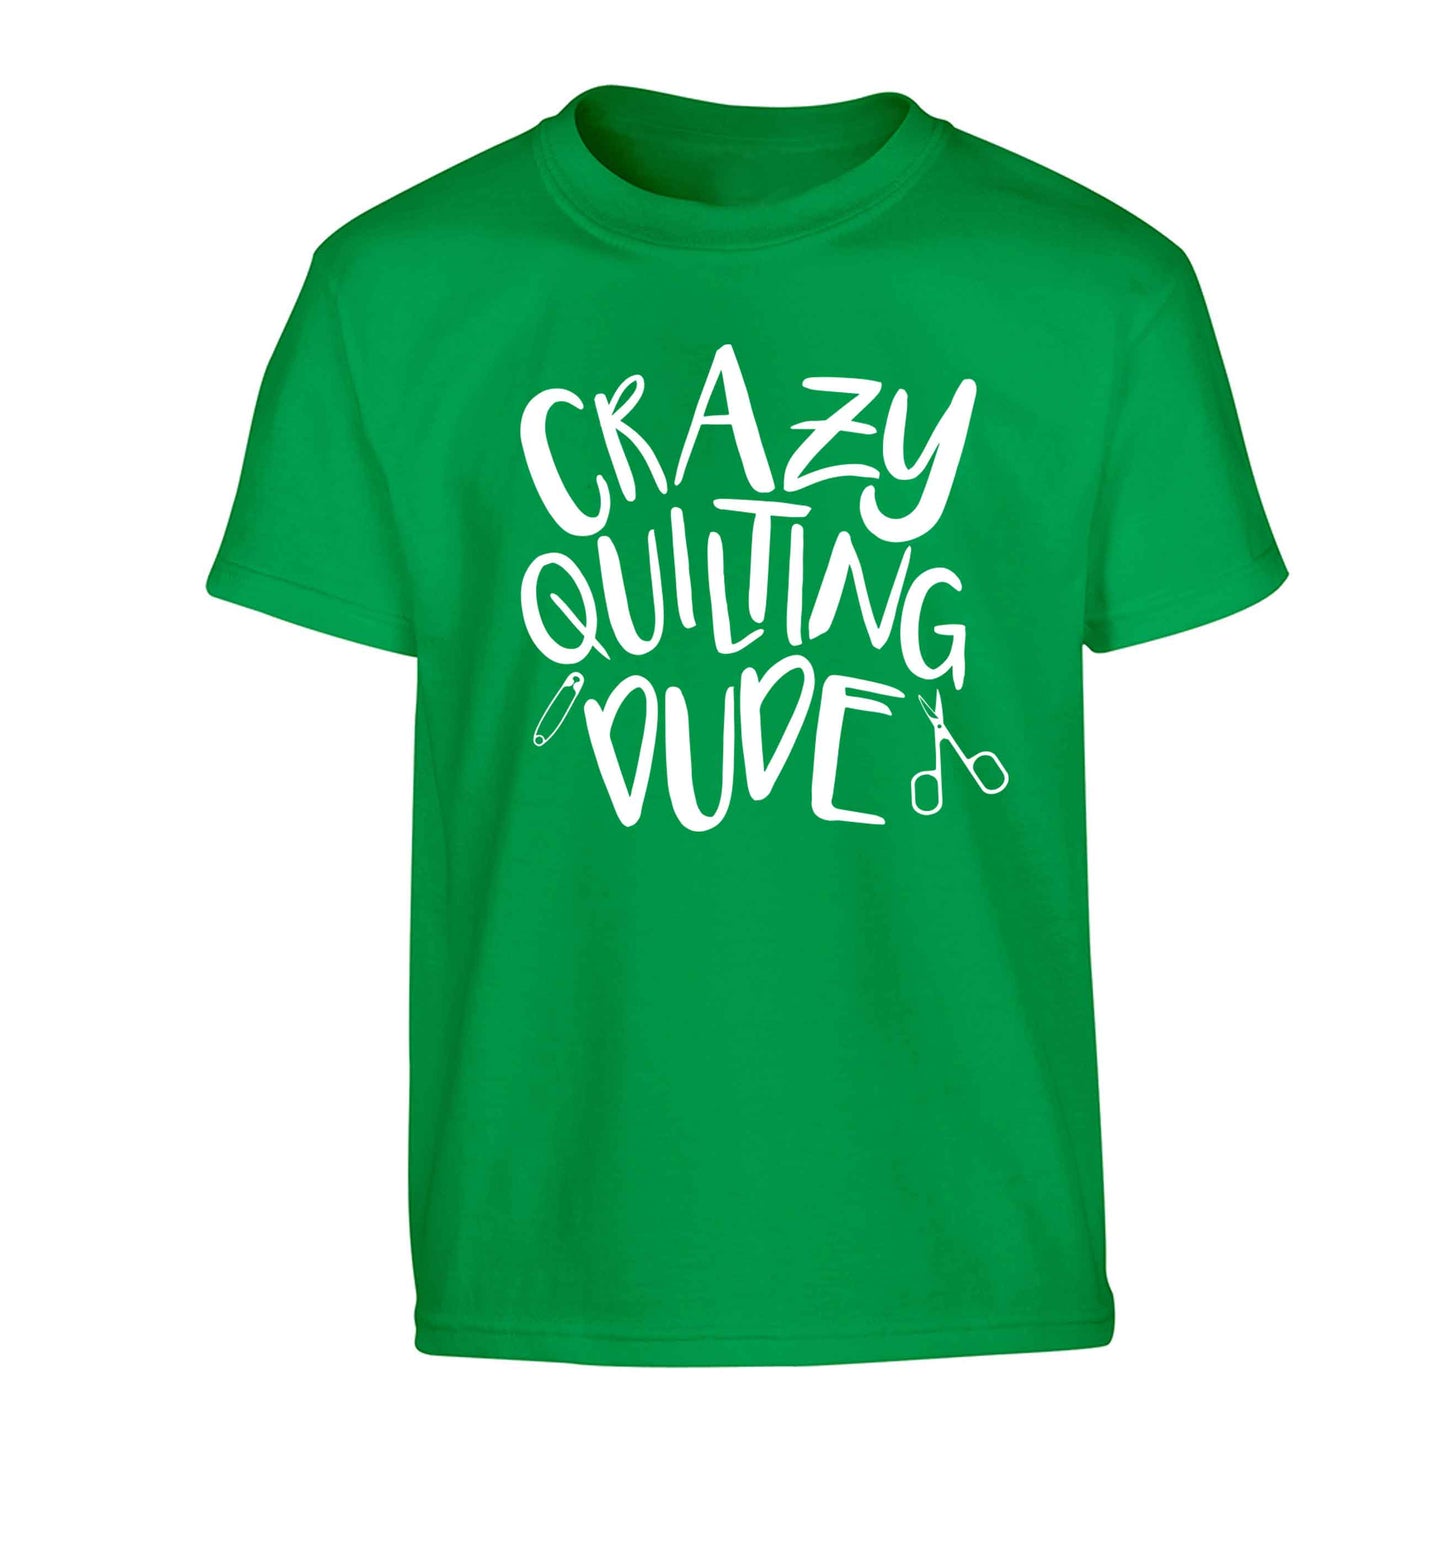 Crazy quilting dude Children's green Tshirt 12-13 Years